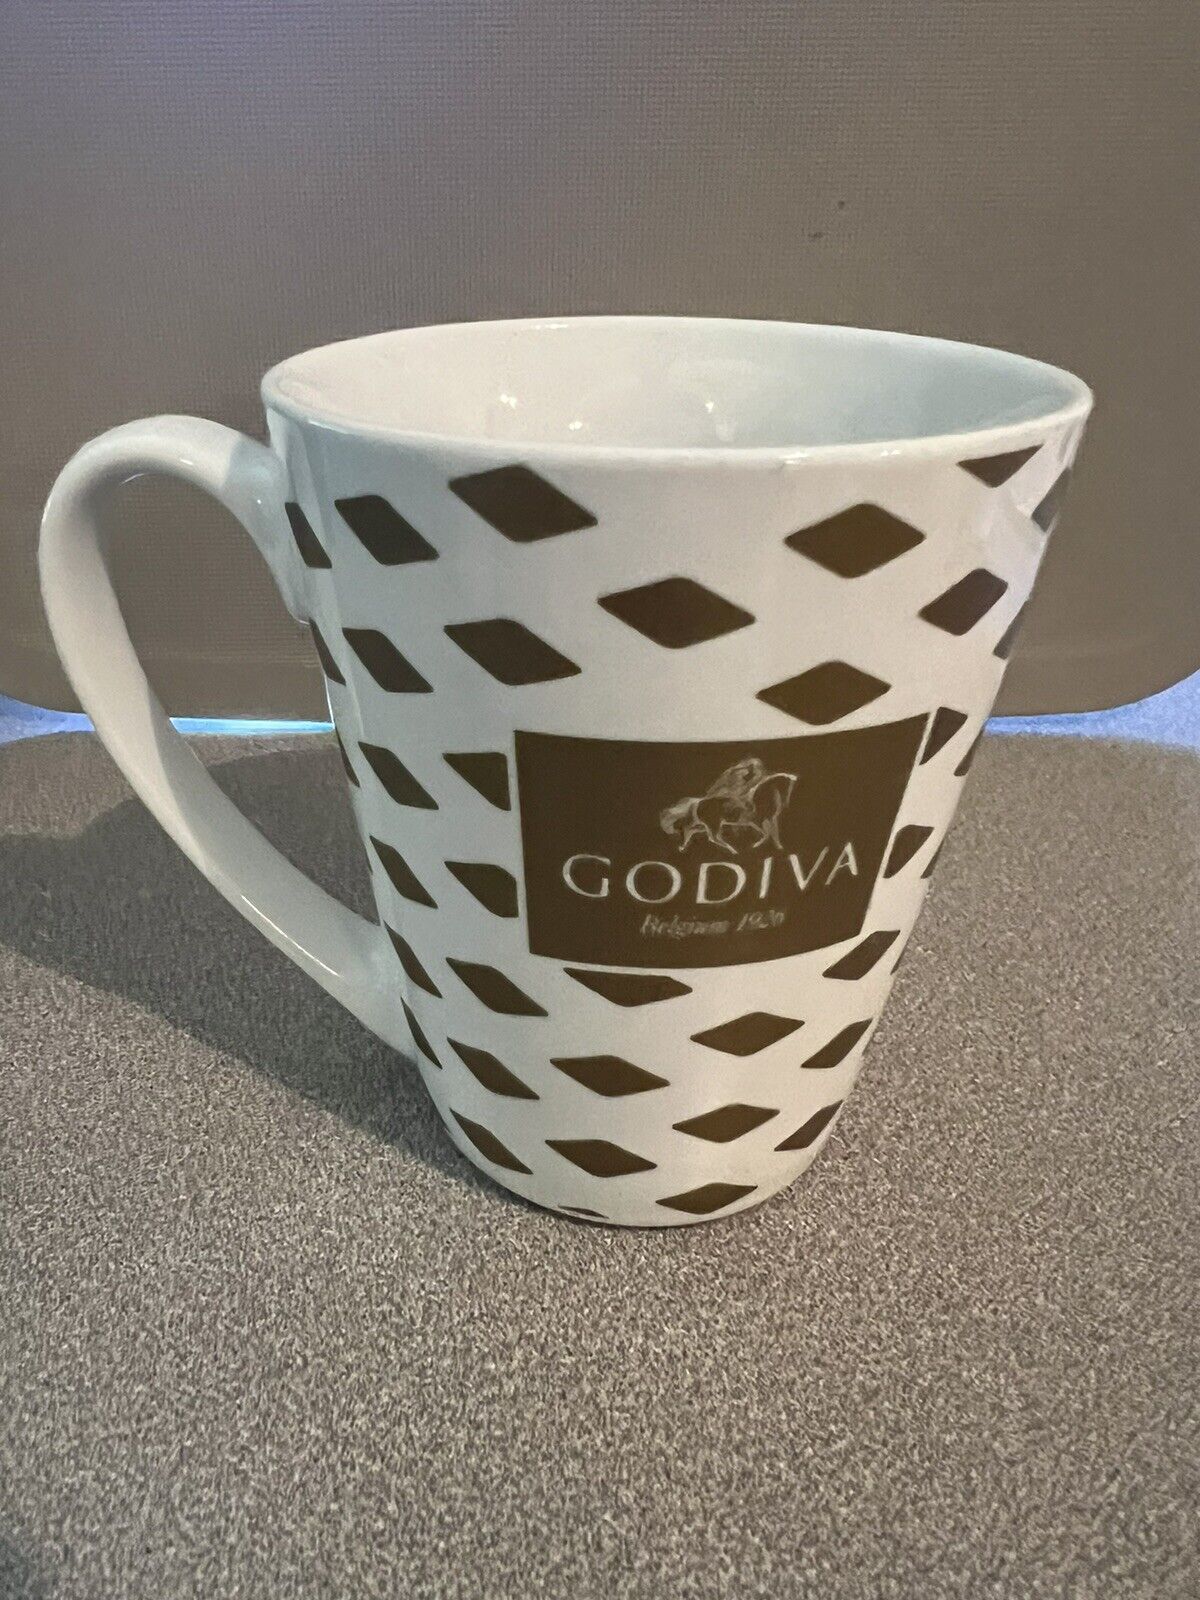 Godiva Coffee Mug Chocolate Belgium 1926 Gold & White 2015 Tea Cup with Handle